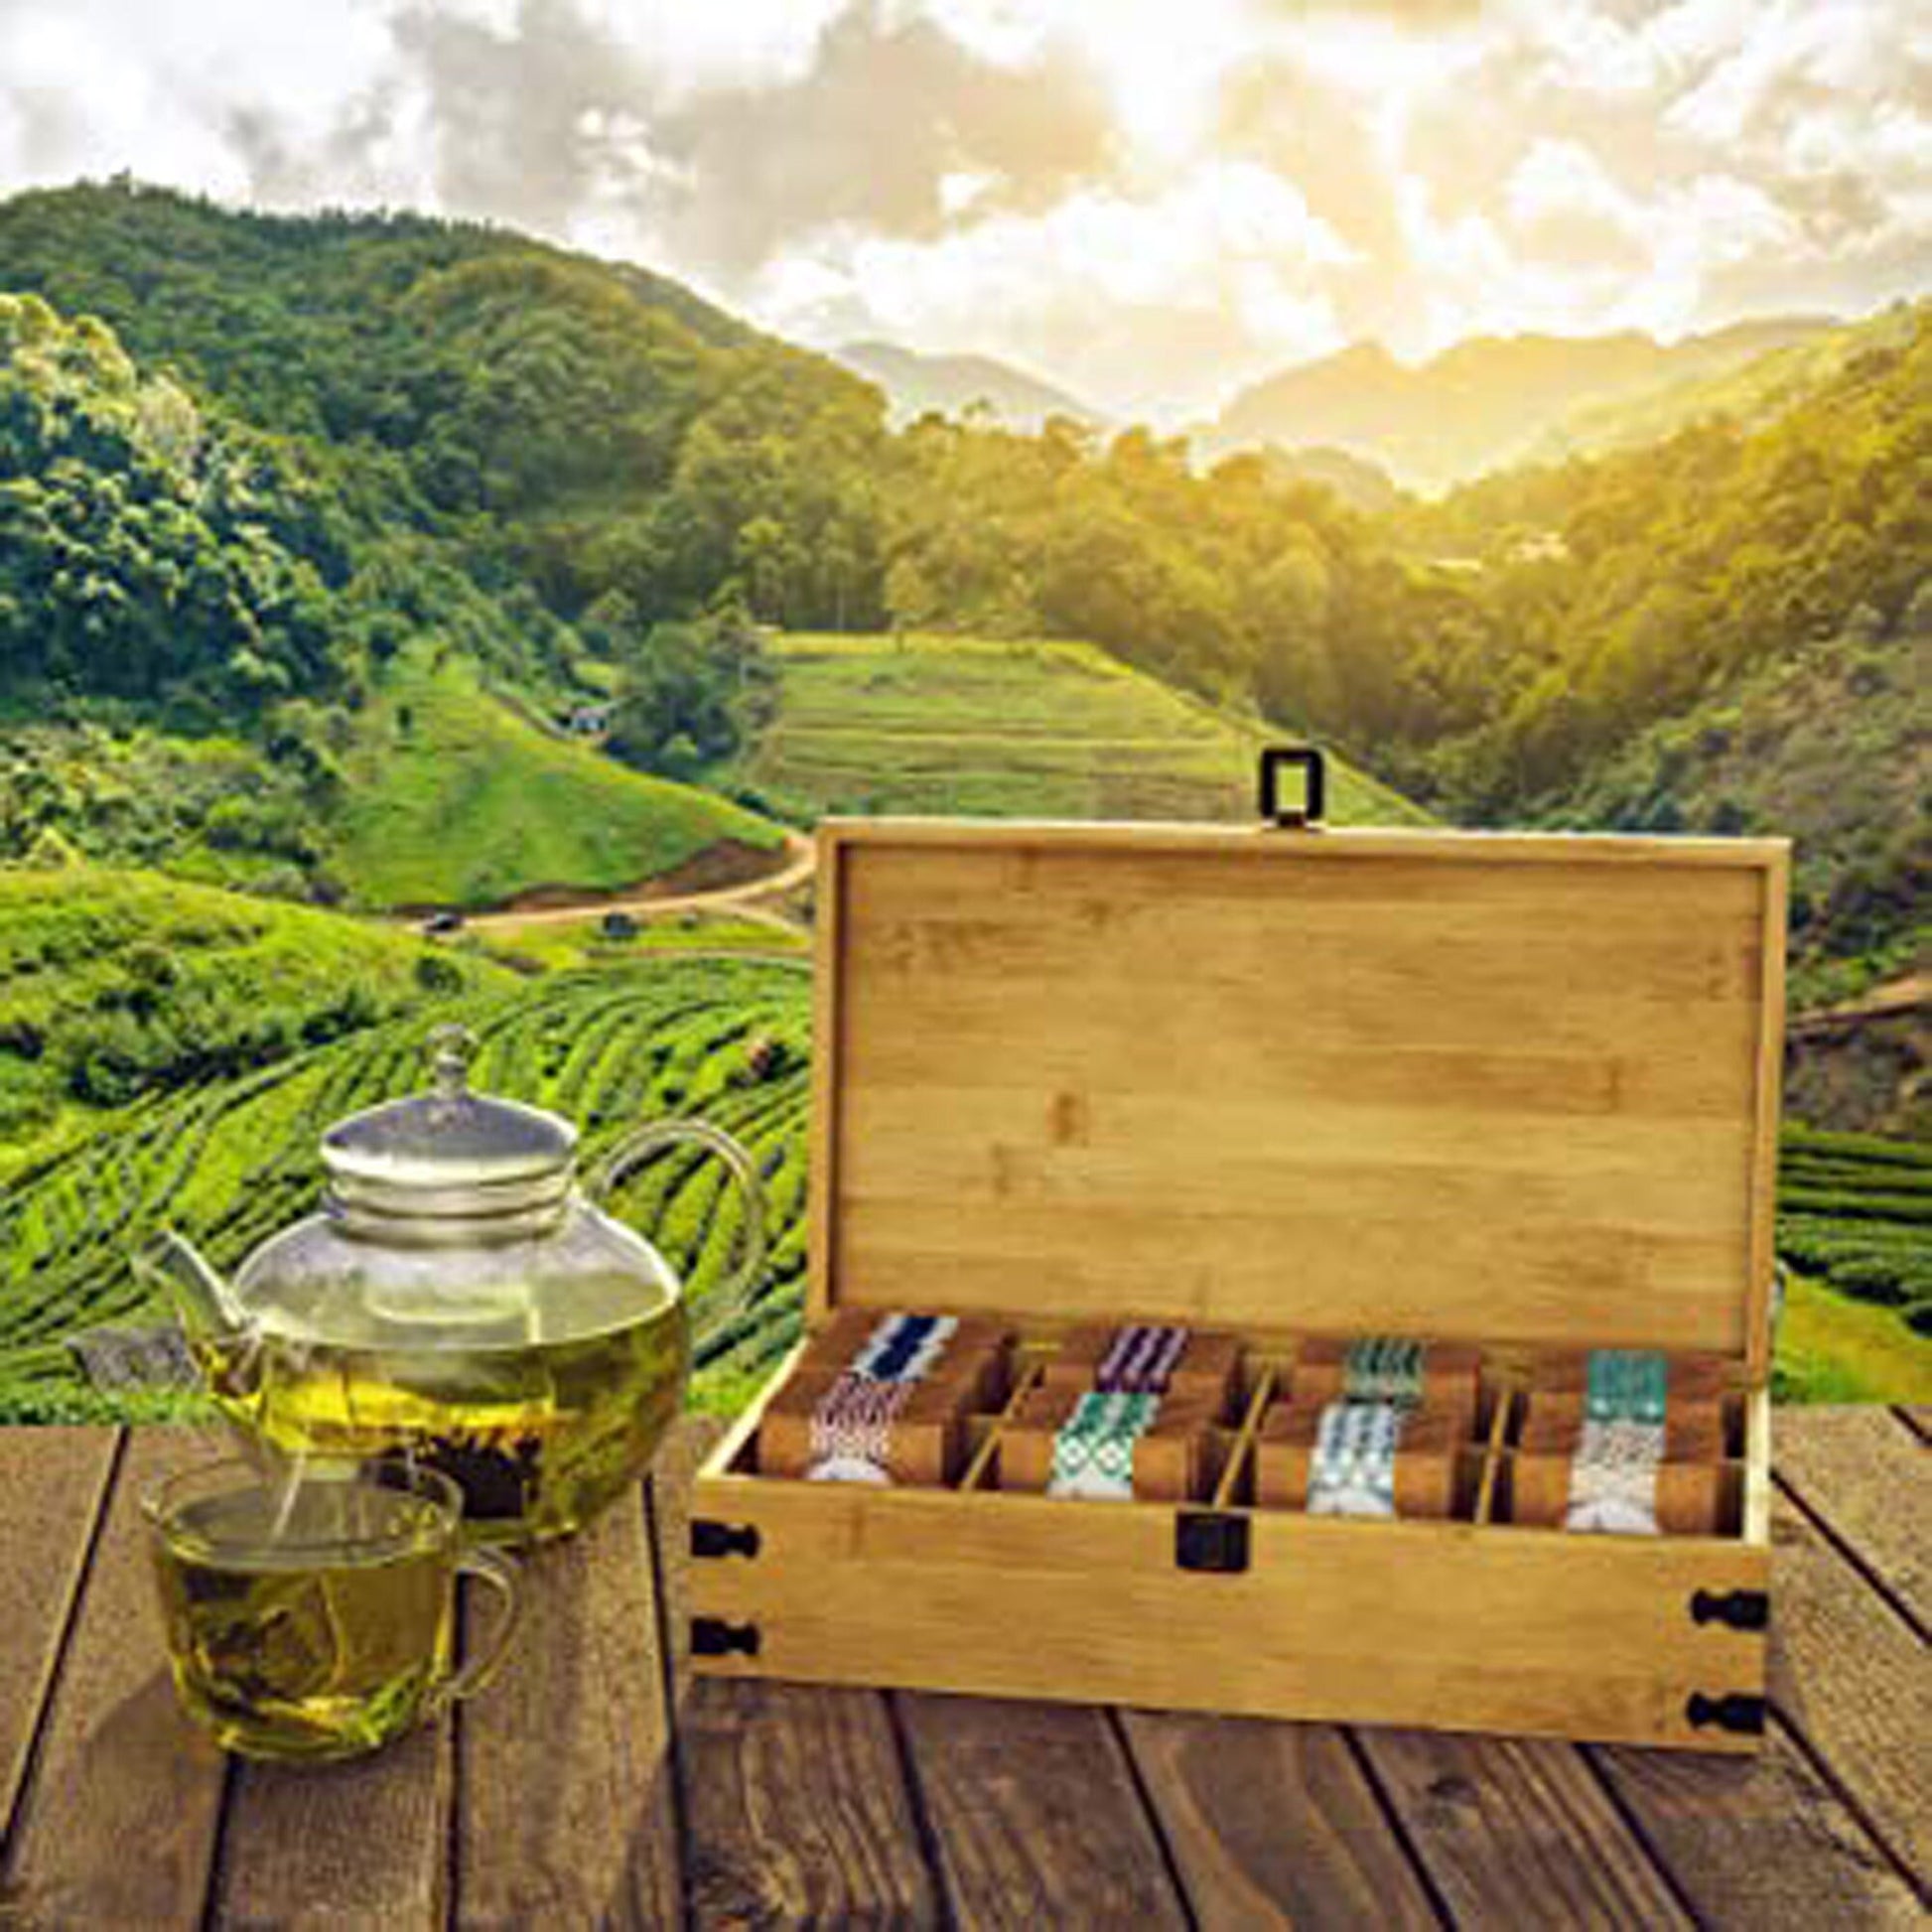 6-Slot Bamboo Tea Organizer Box, Countertop Storage Chest with 4 Adjus –  Zen Earth Inspired